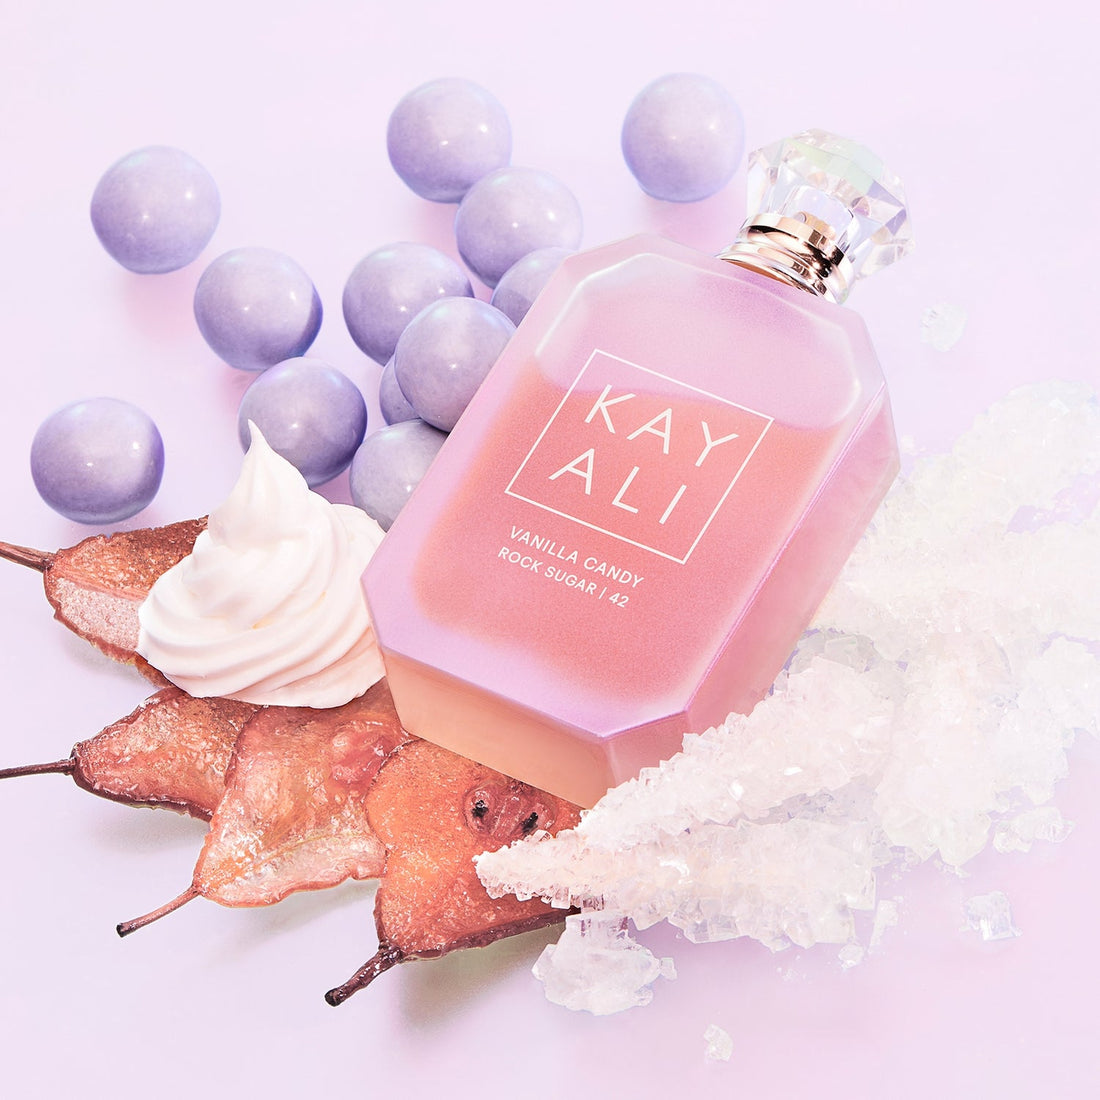 Huda Beauty - Kayali Vanilla Candy Rock Sugar 42 Eau de Parfum